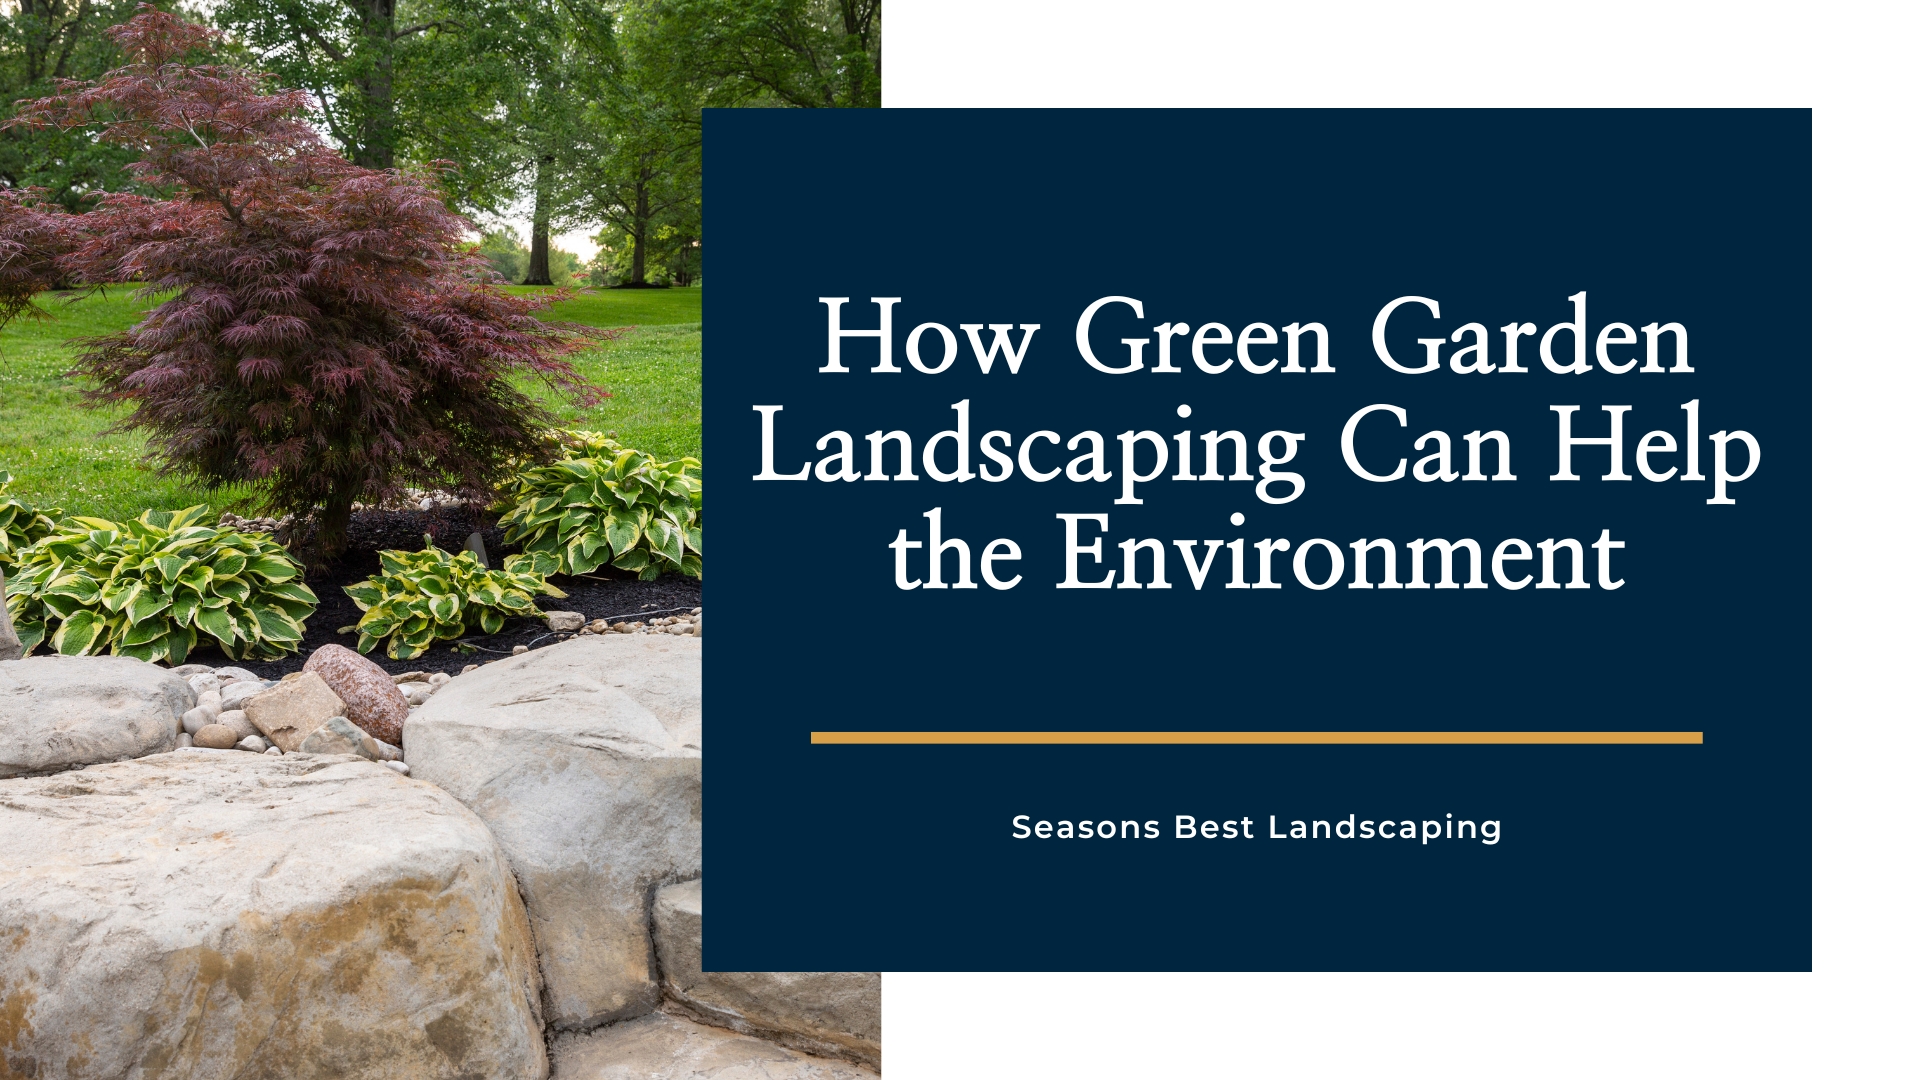 Green Garden Landscaping Blog Image Seasons Best Landscaping